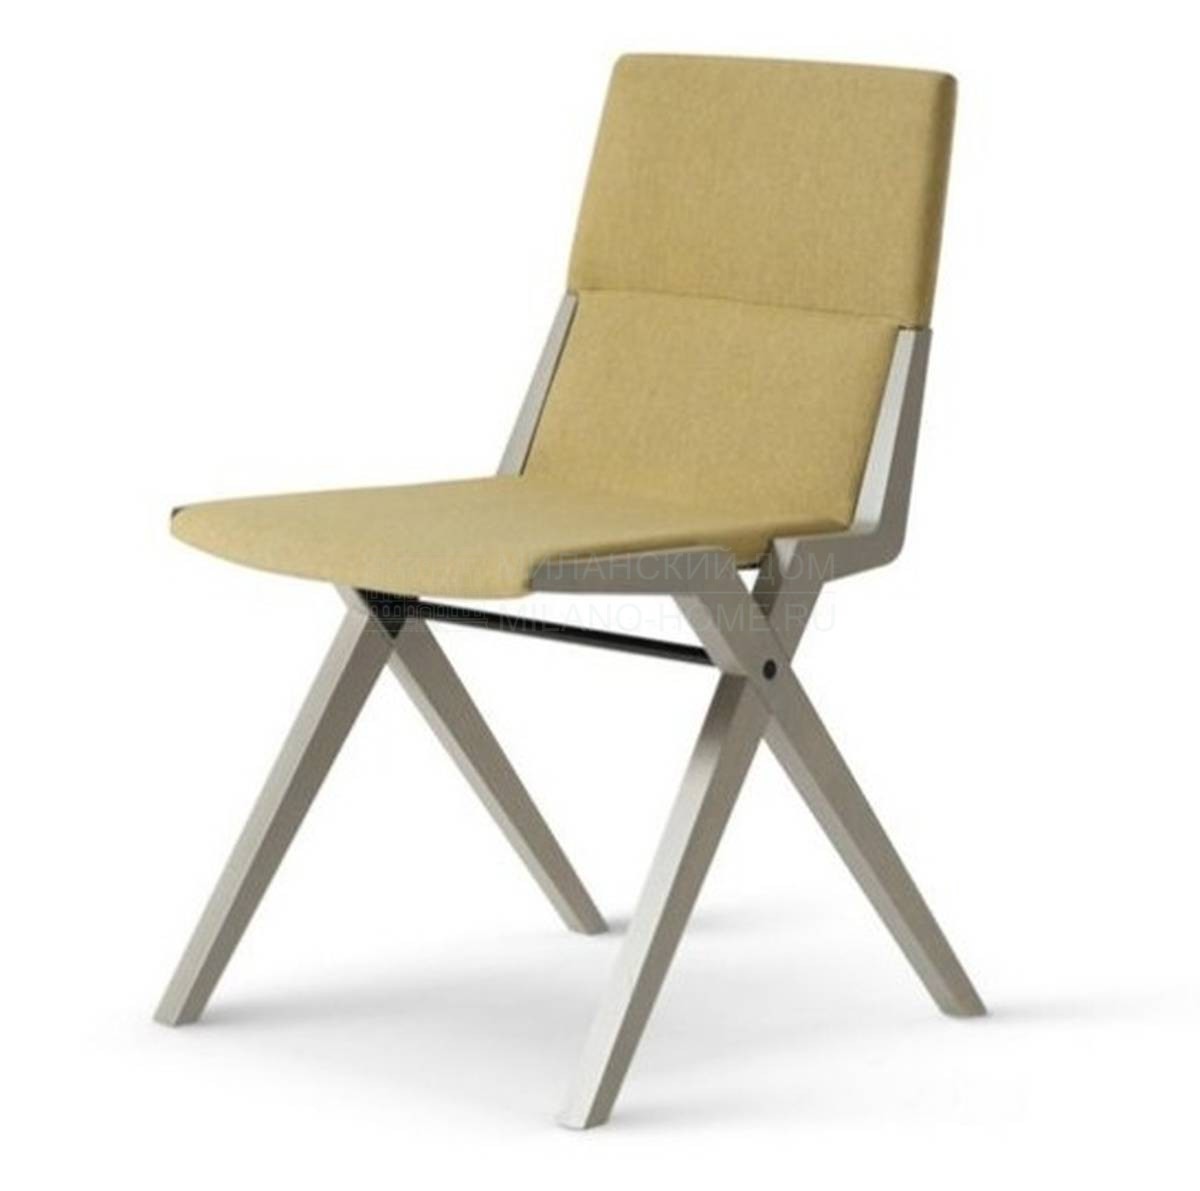 Стул Ixilon chair из Франции фабрики ROCHE BOBOIS